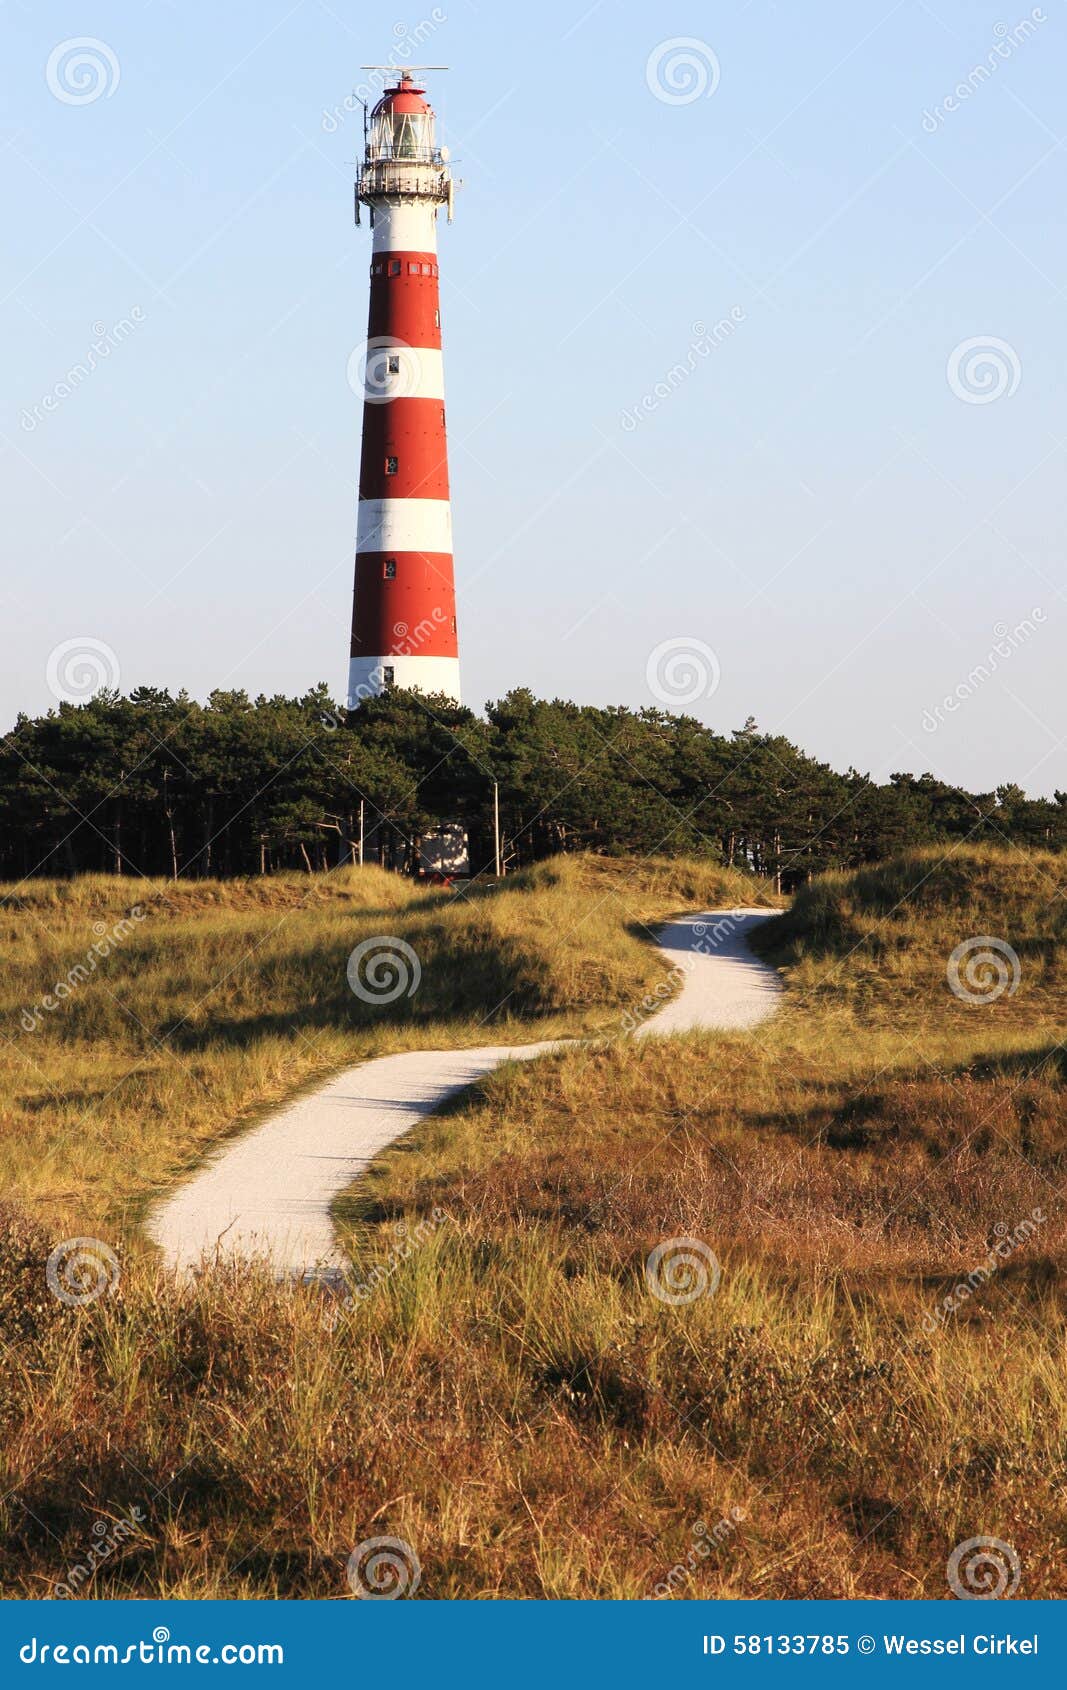 ameland lighthouse bornrif near hollum, netherlands